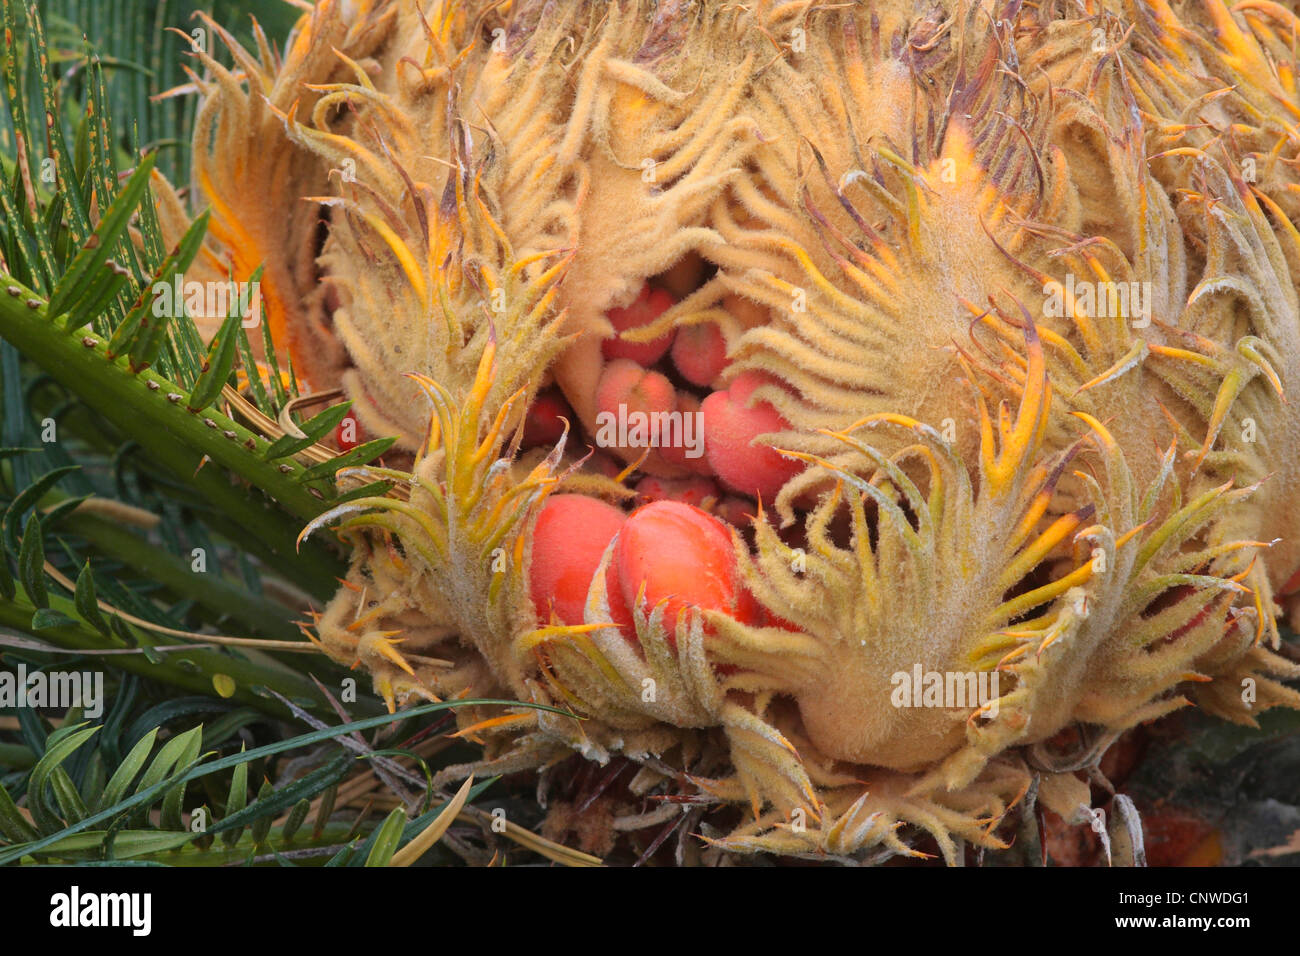 sago palm (Cycas revoluta), mit sporopylls an ripe seeds Stock Photo